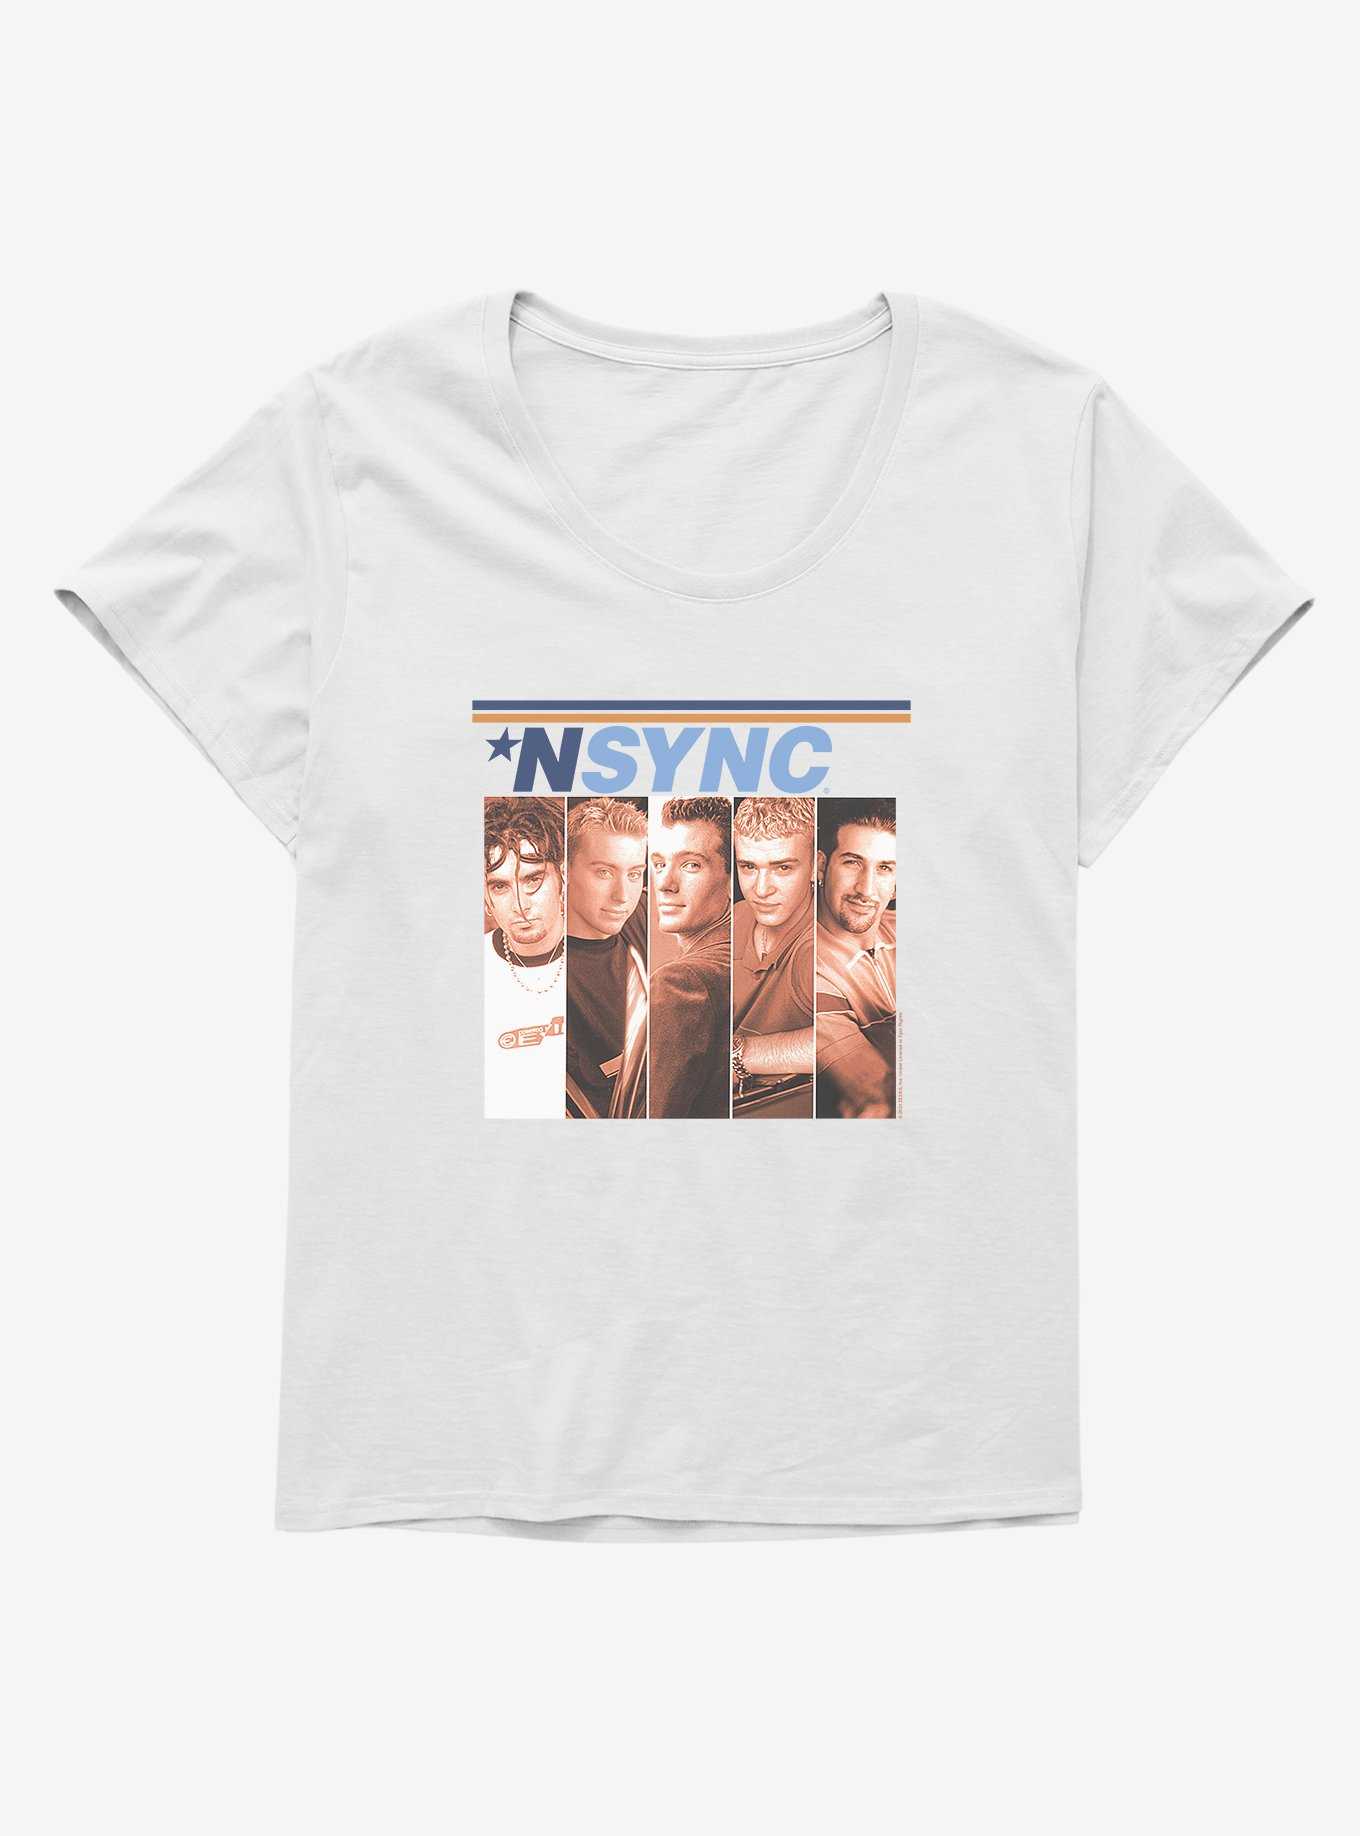 NSYNC Self Titled Album Cover Girls T-Shirt Plus Size, , hi-res